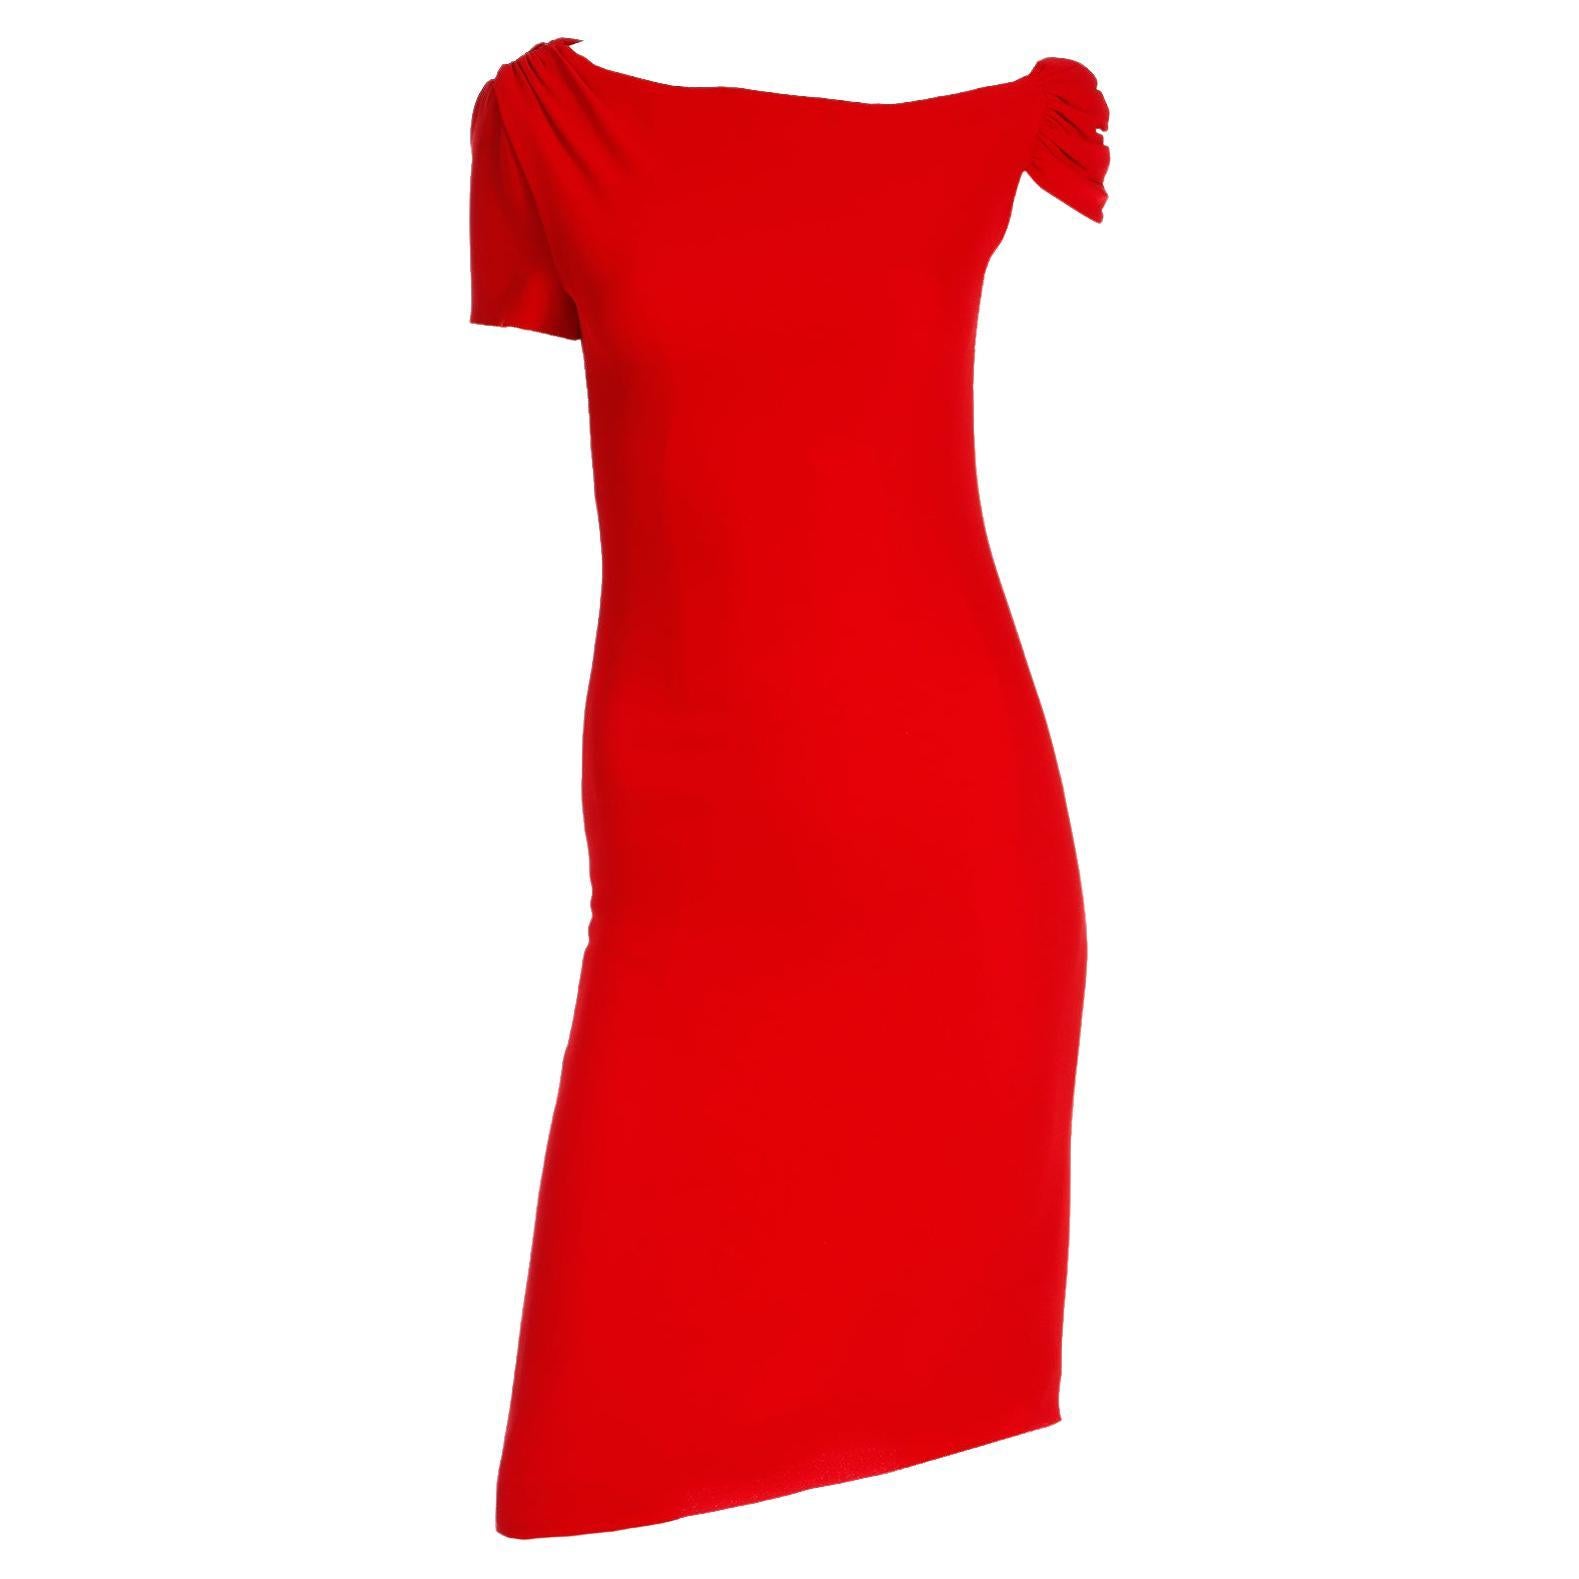 Valentino Garavani 2000s Red Silk Crepe Asymmetrical Sleeve Day or Evening Dress